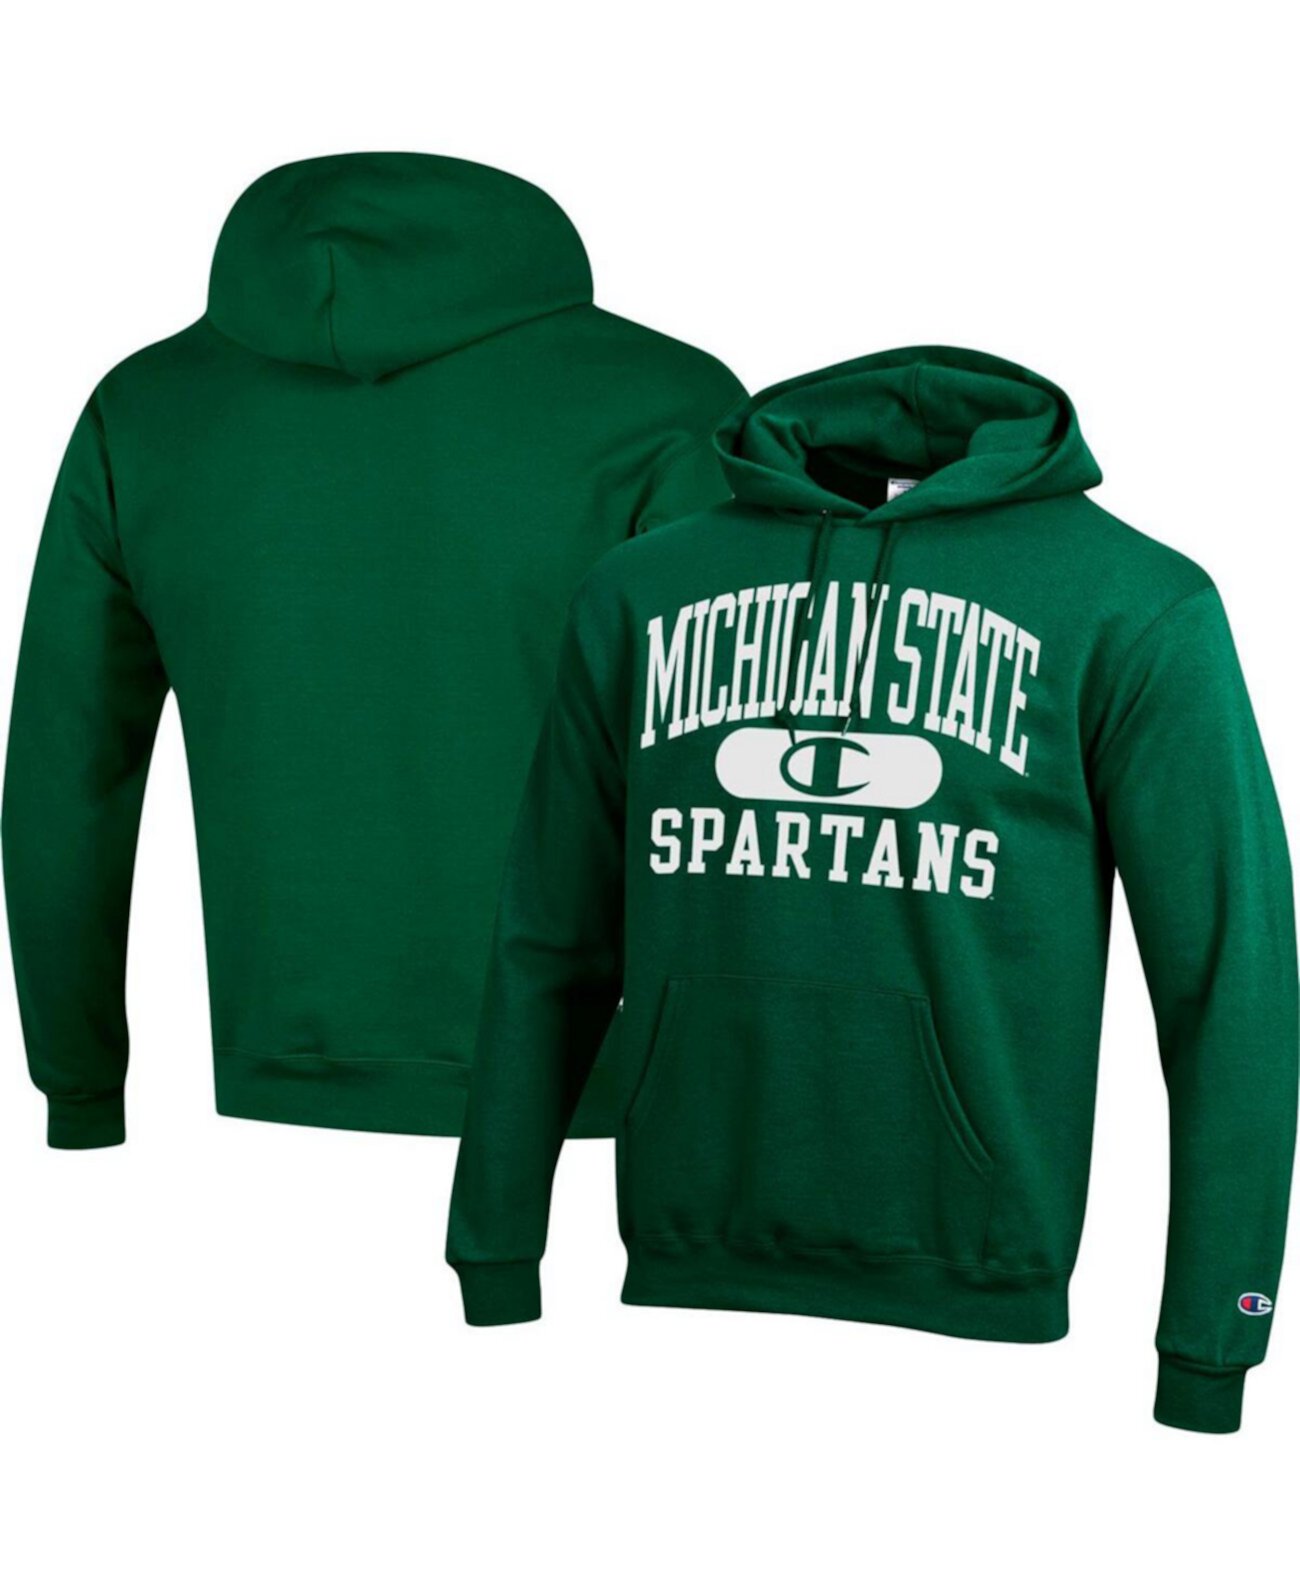 Мужской зеленый пуловер с капюшоном Michigan State Spartans Arch Pill Champion